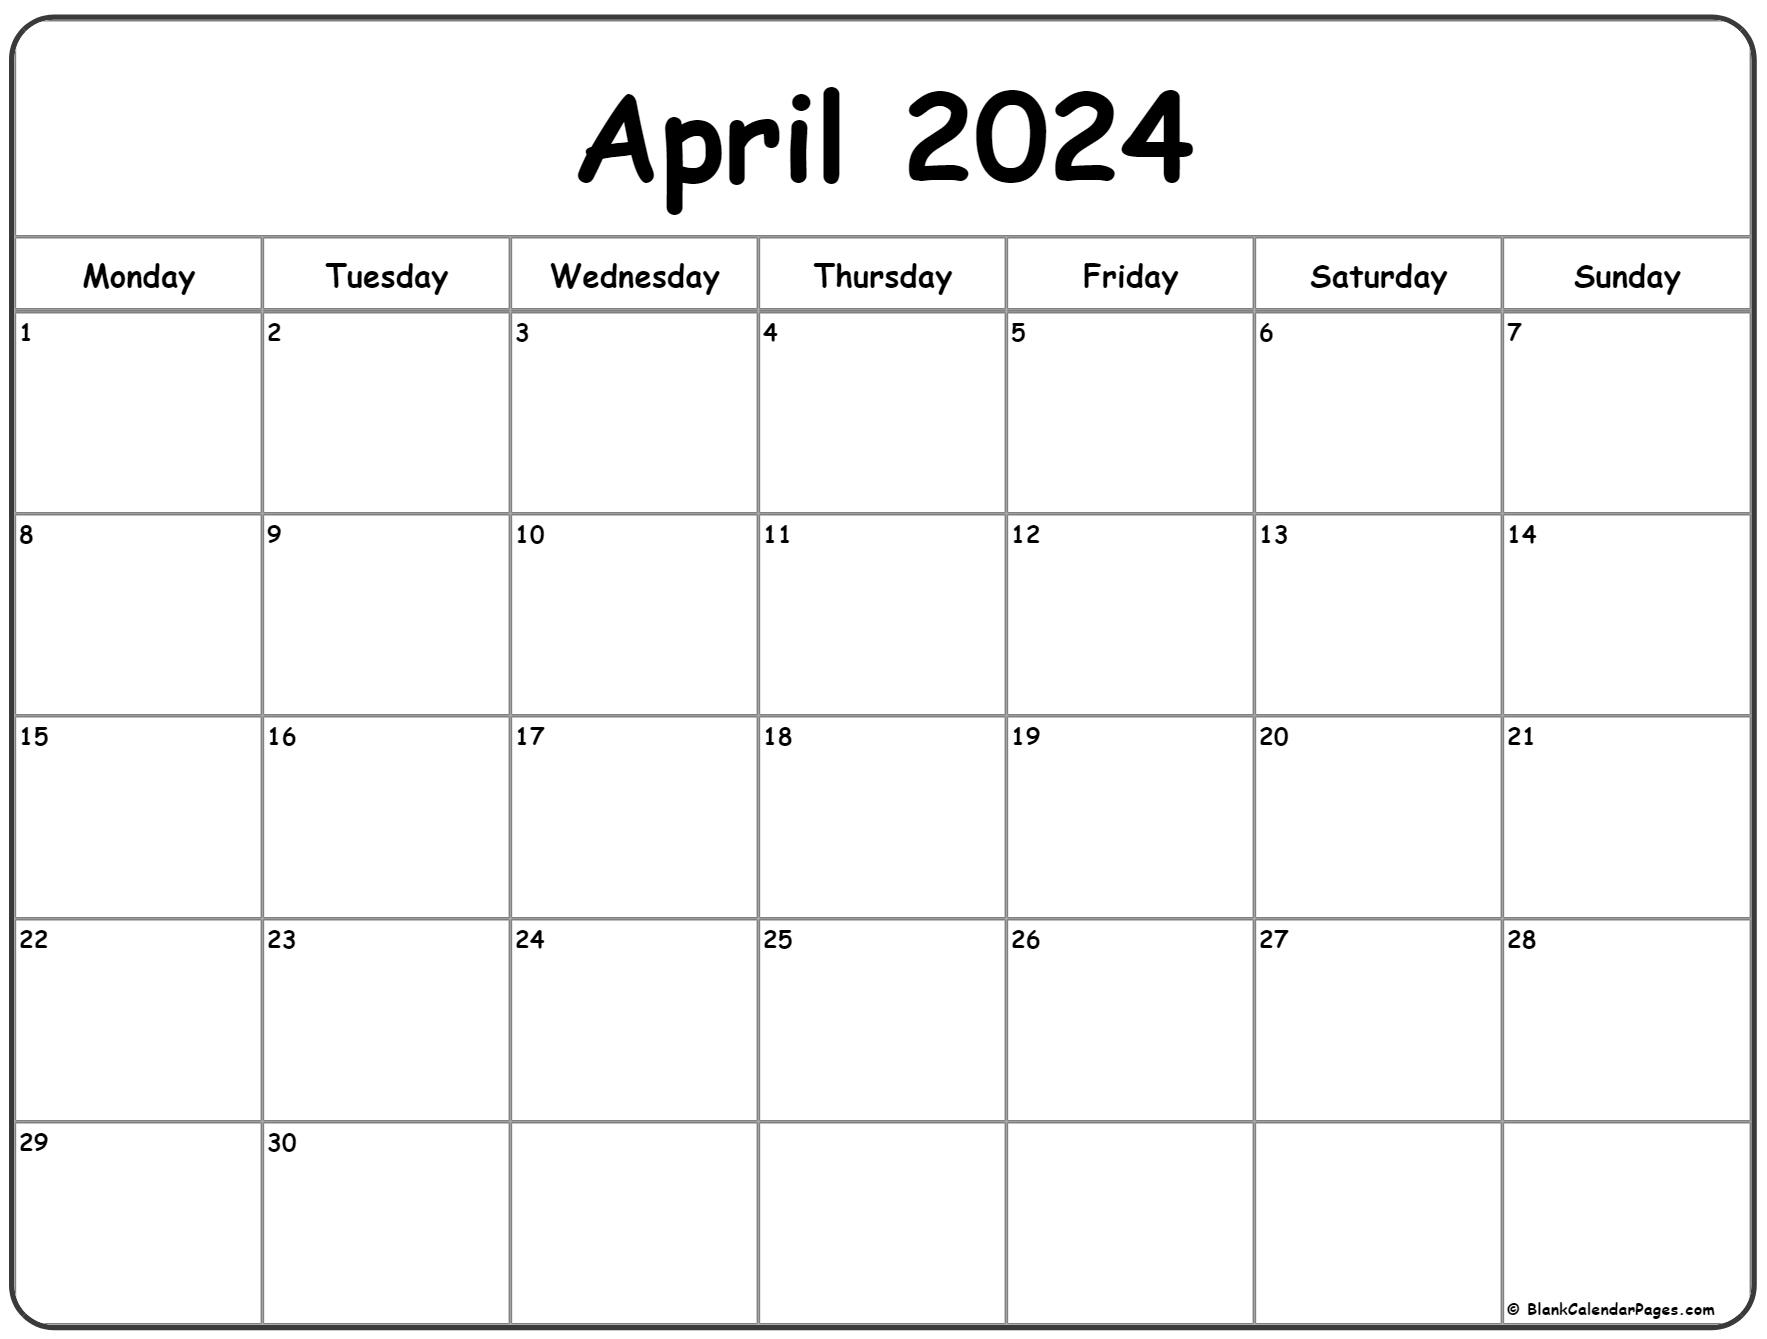 April 2024 Monday Calendar | Monday To Sunday for Printable Blank Calendar April 2024